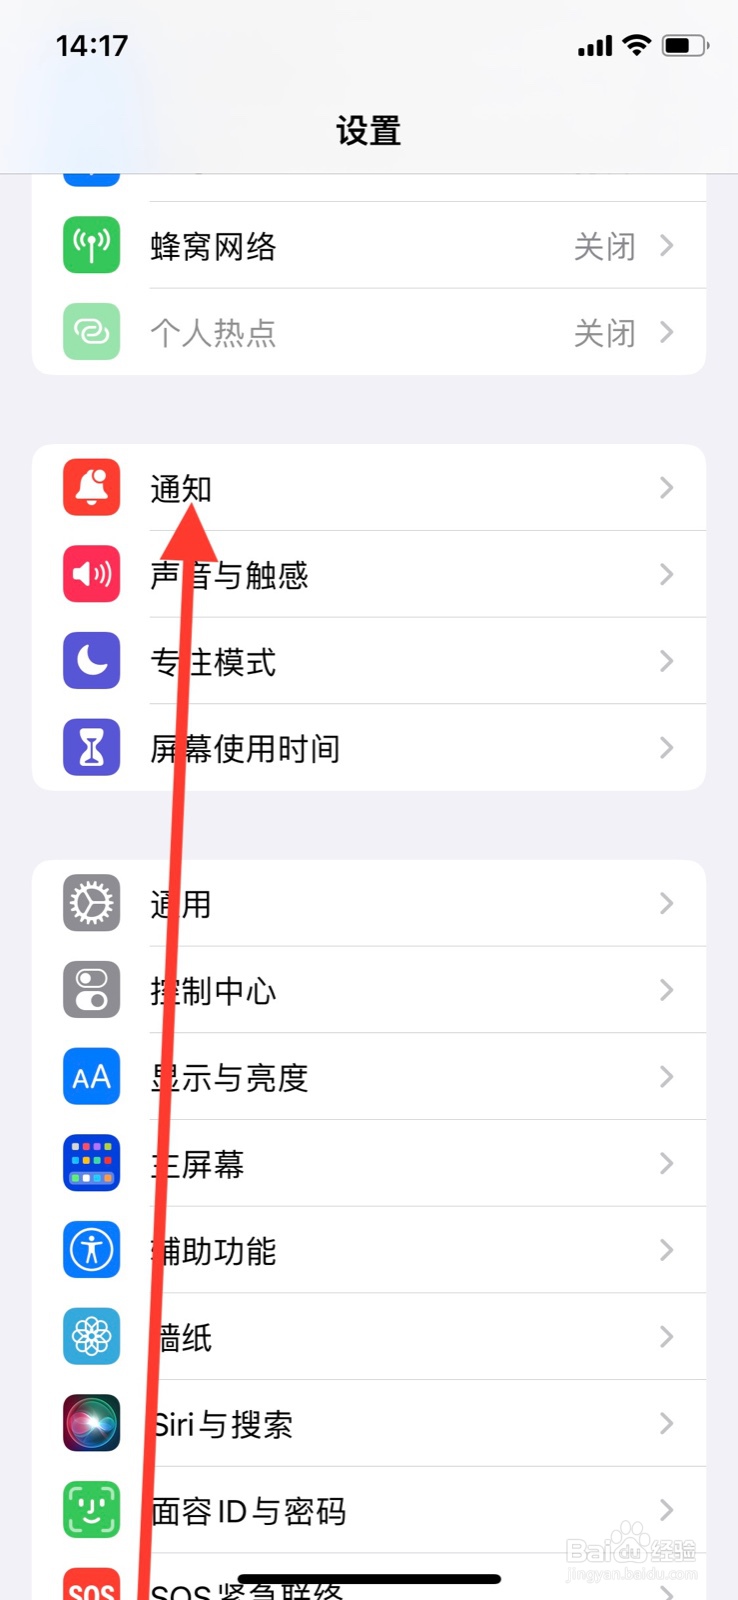 <b>iPhone通知中心同意“广东移动”app通知显示</b>